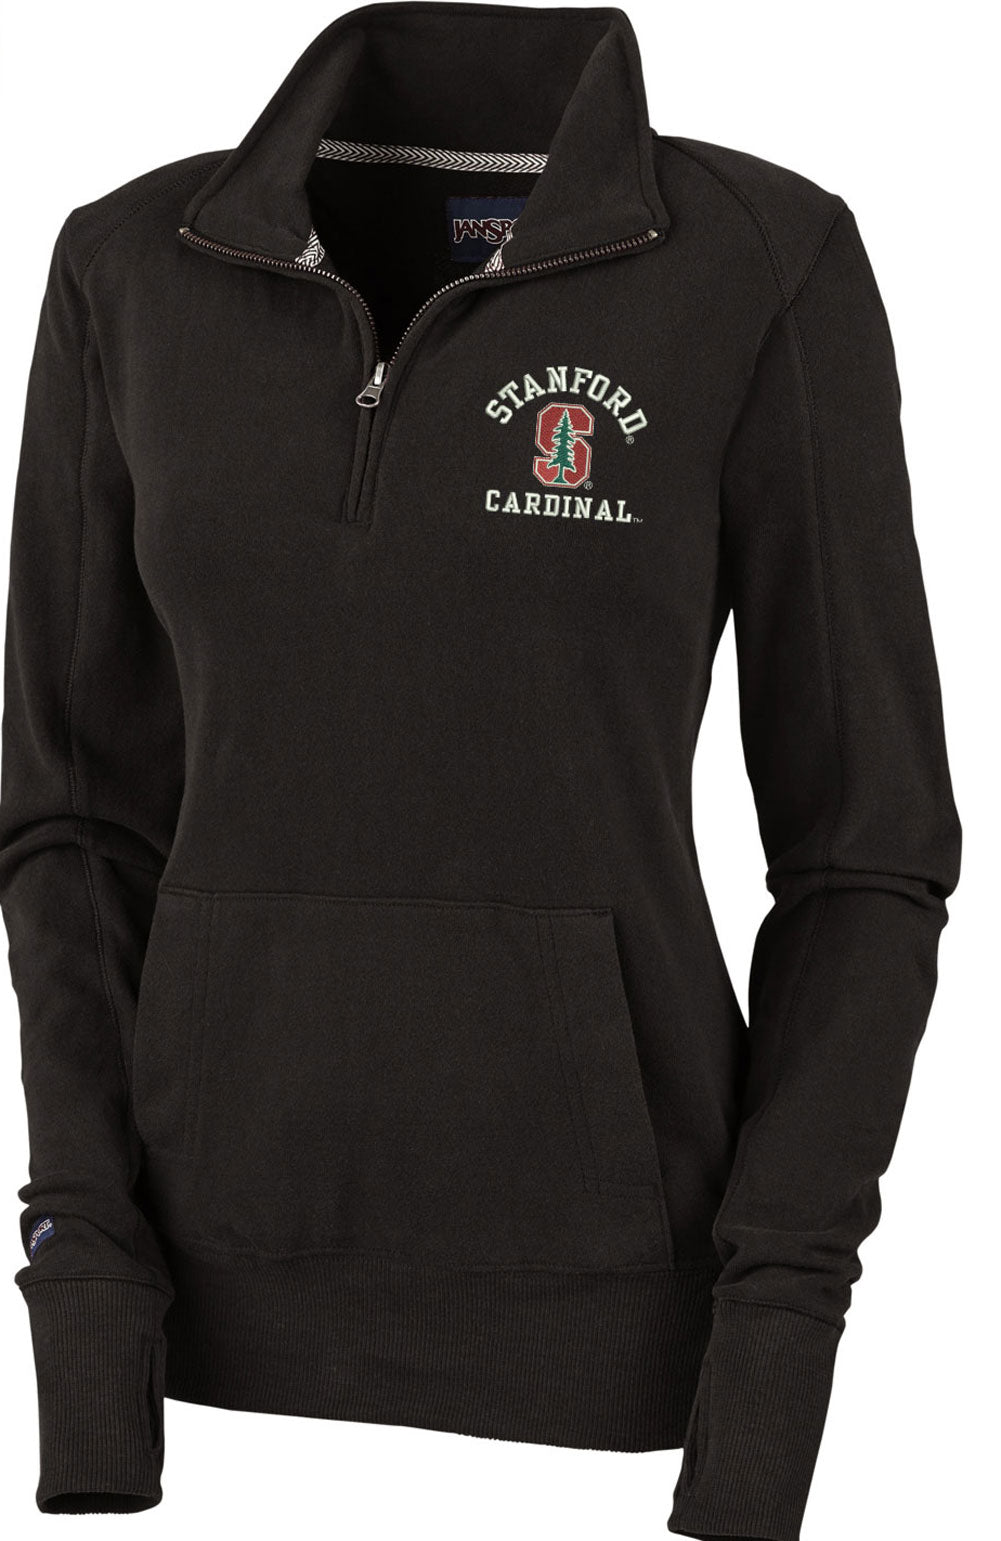 Stanford Cardinal Women's 1/4" Zip Retro Sweatshirt-Black-Shop College Wear